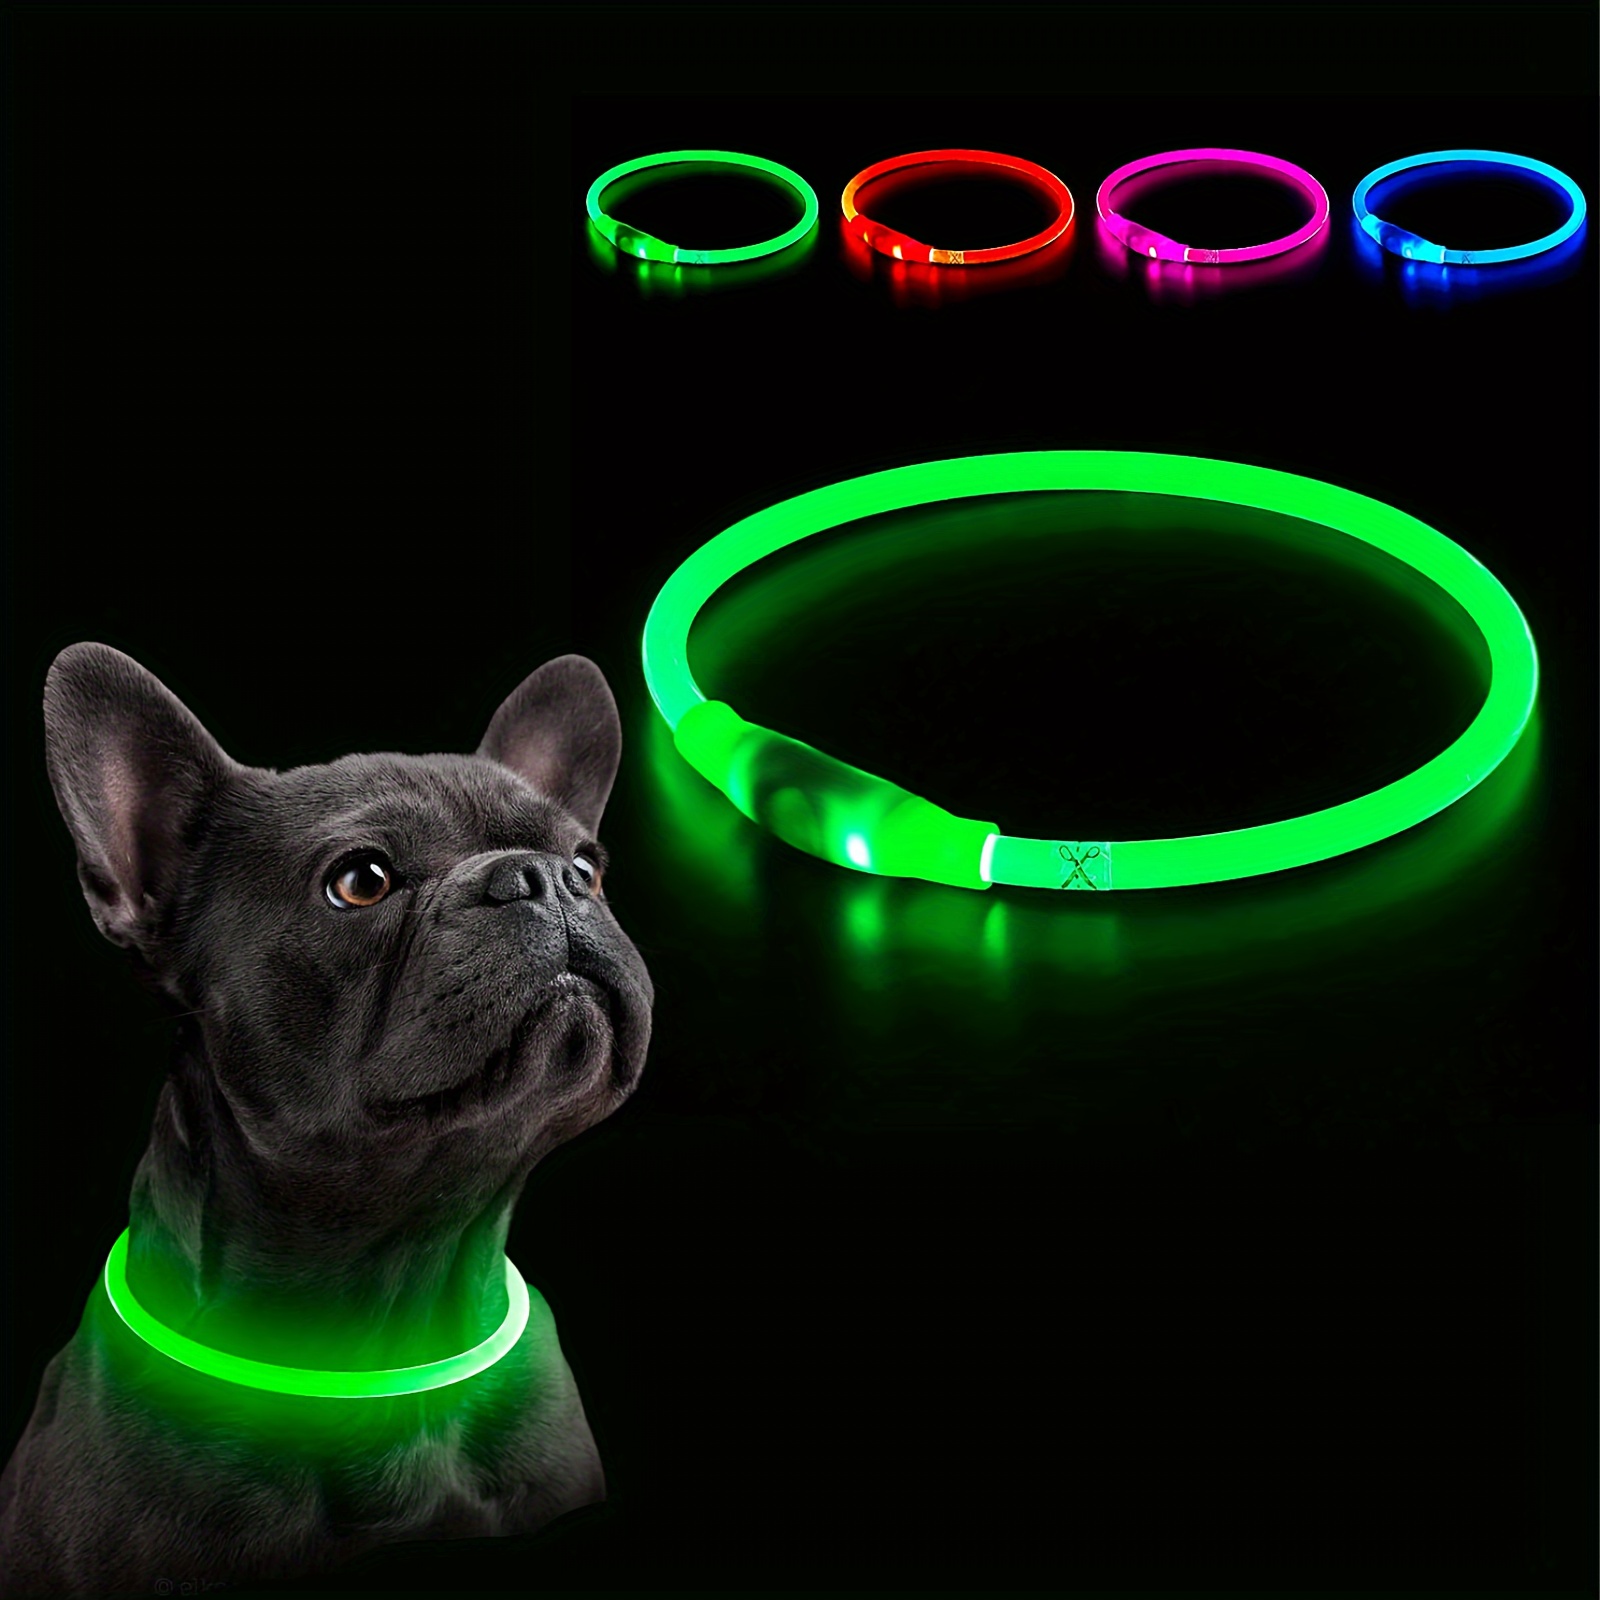  LaRoo Luces para perros para caminar por la noche, luces LED  para collar de perro con clip para luz nocturna, collar de perro, luz para  pasear al perro, collar de perro